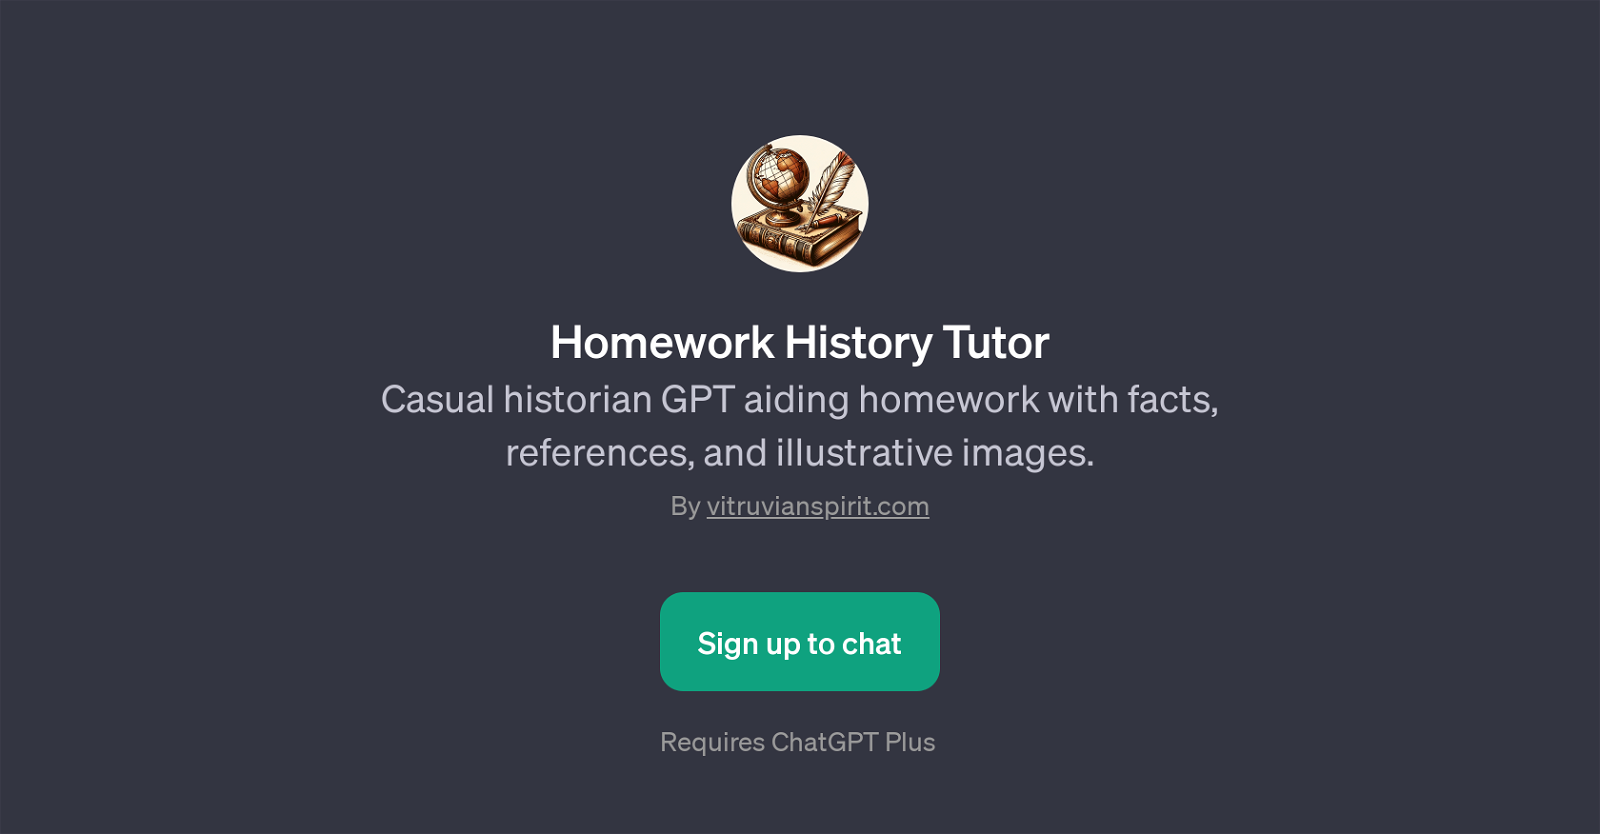 Homework History Tutor website